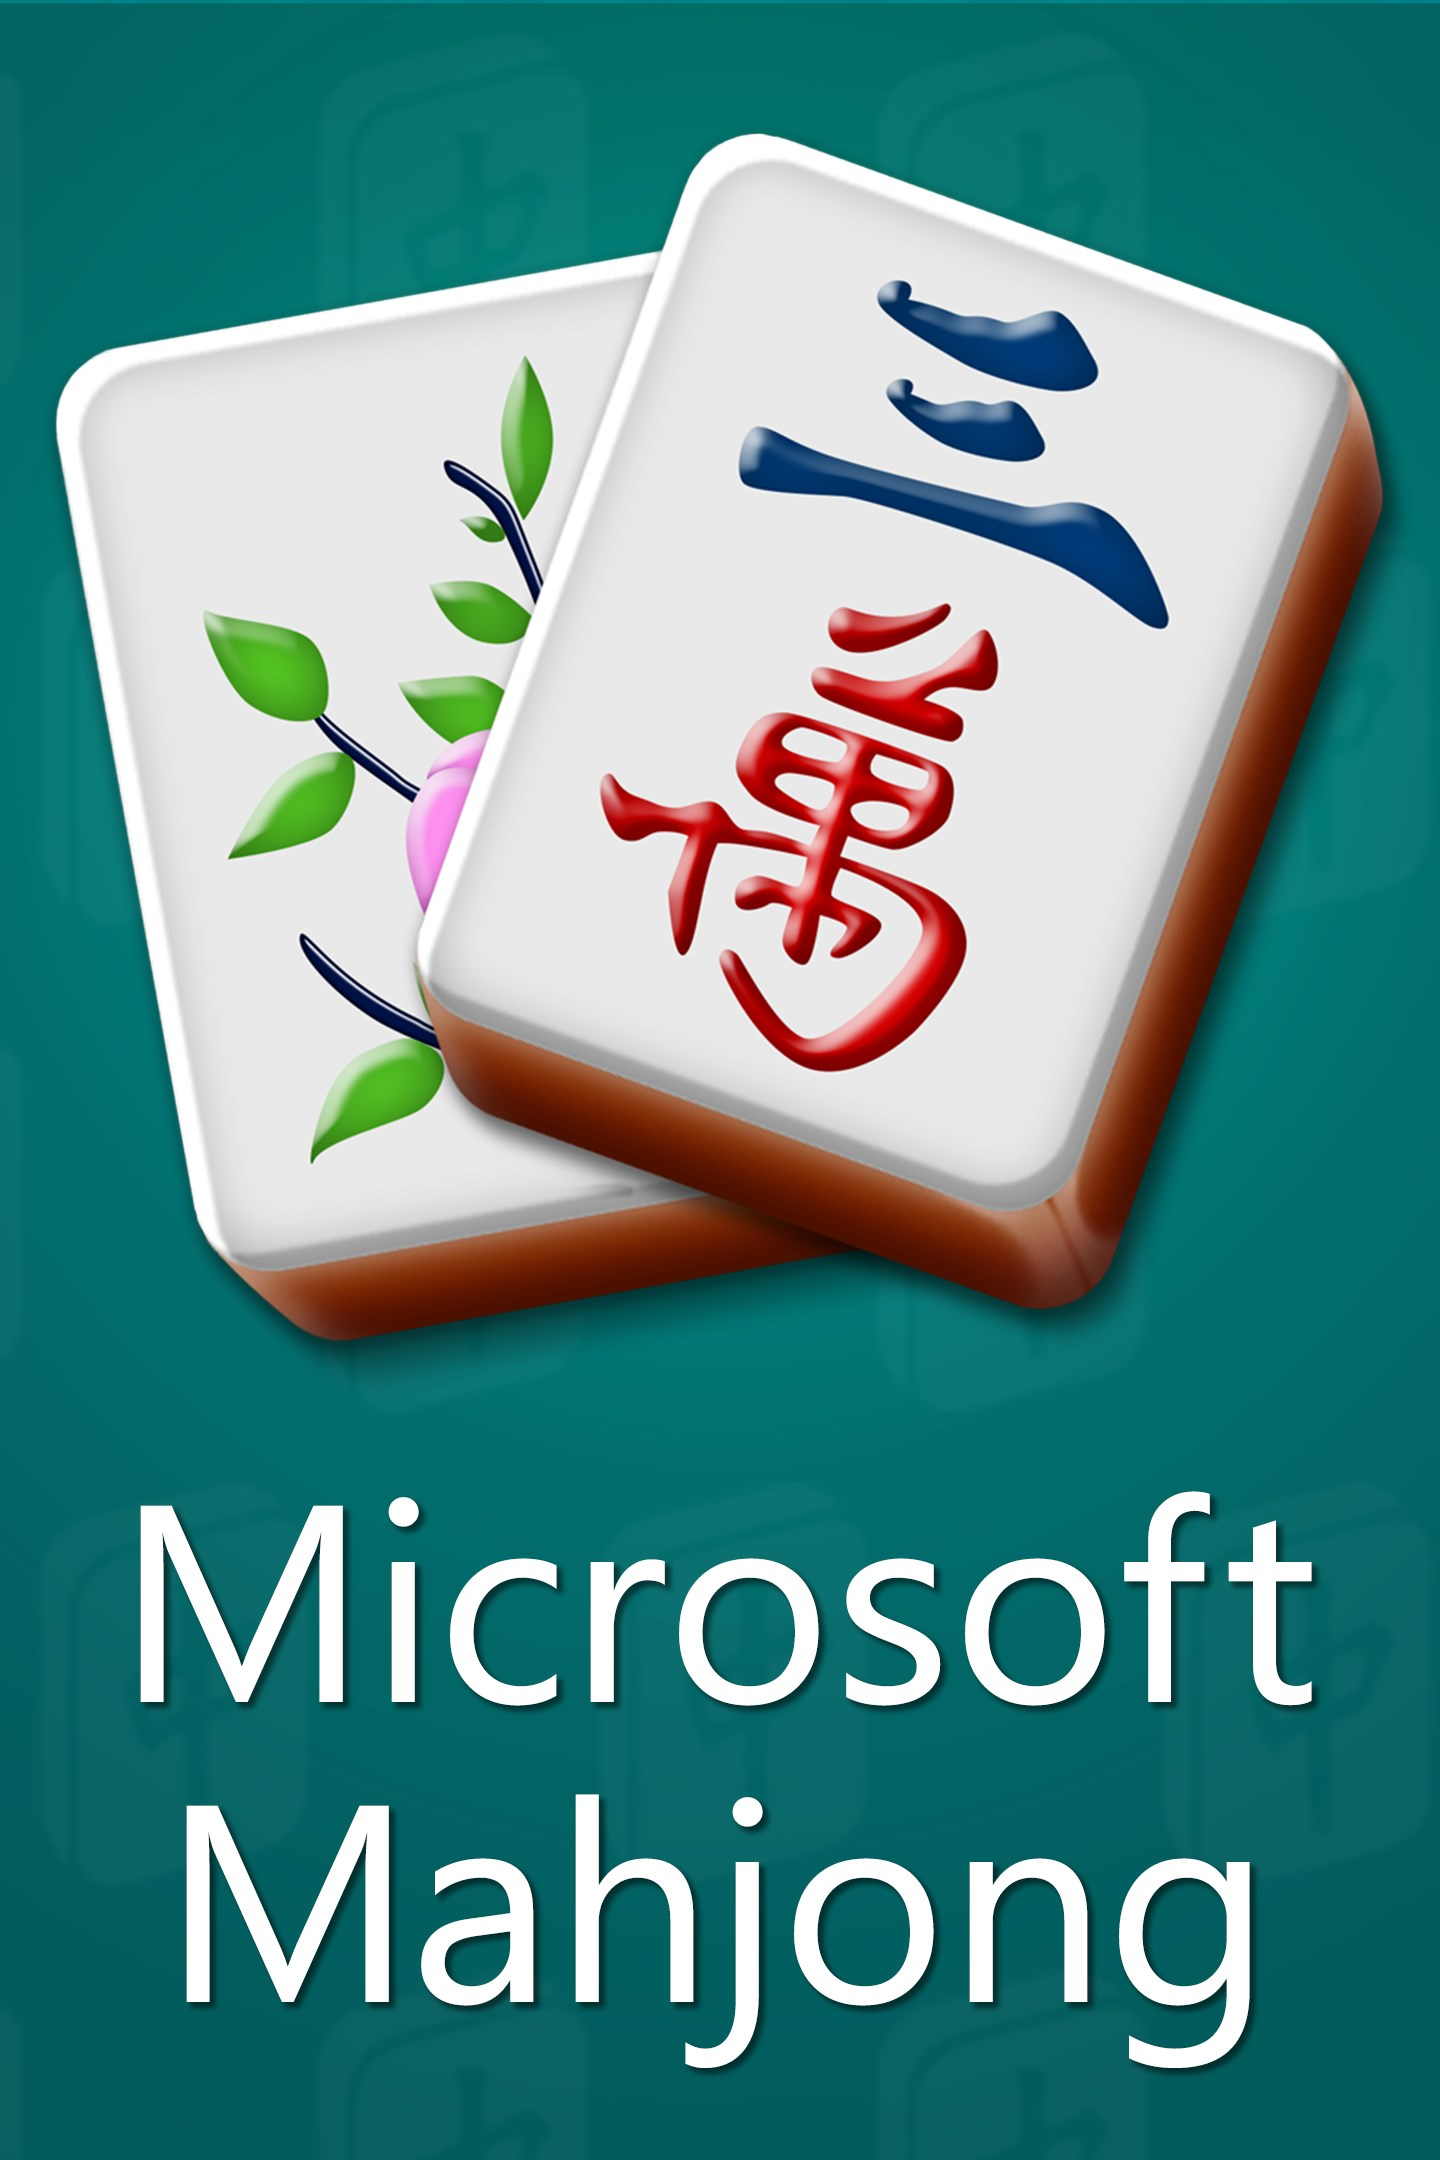 Woodventure - Mahjong Connect - Microsoft-appar